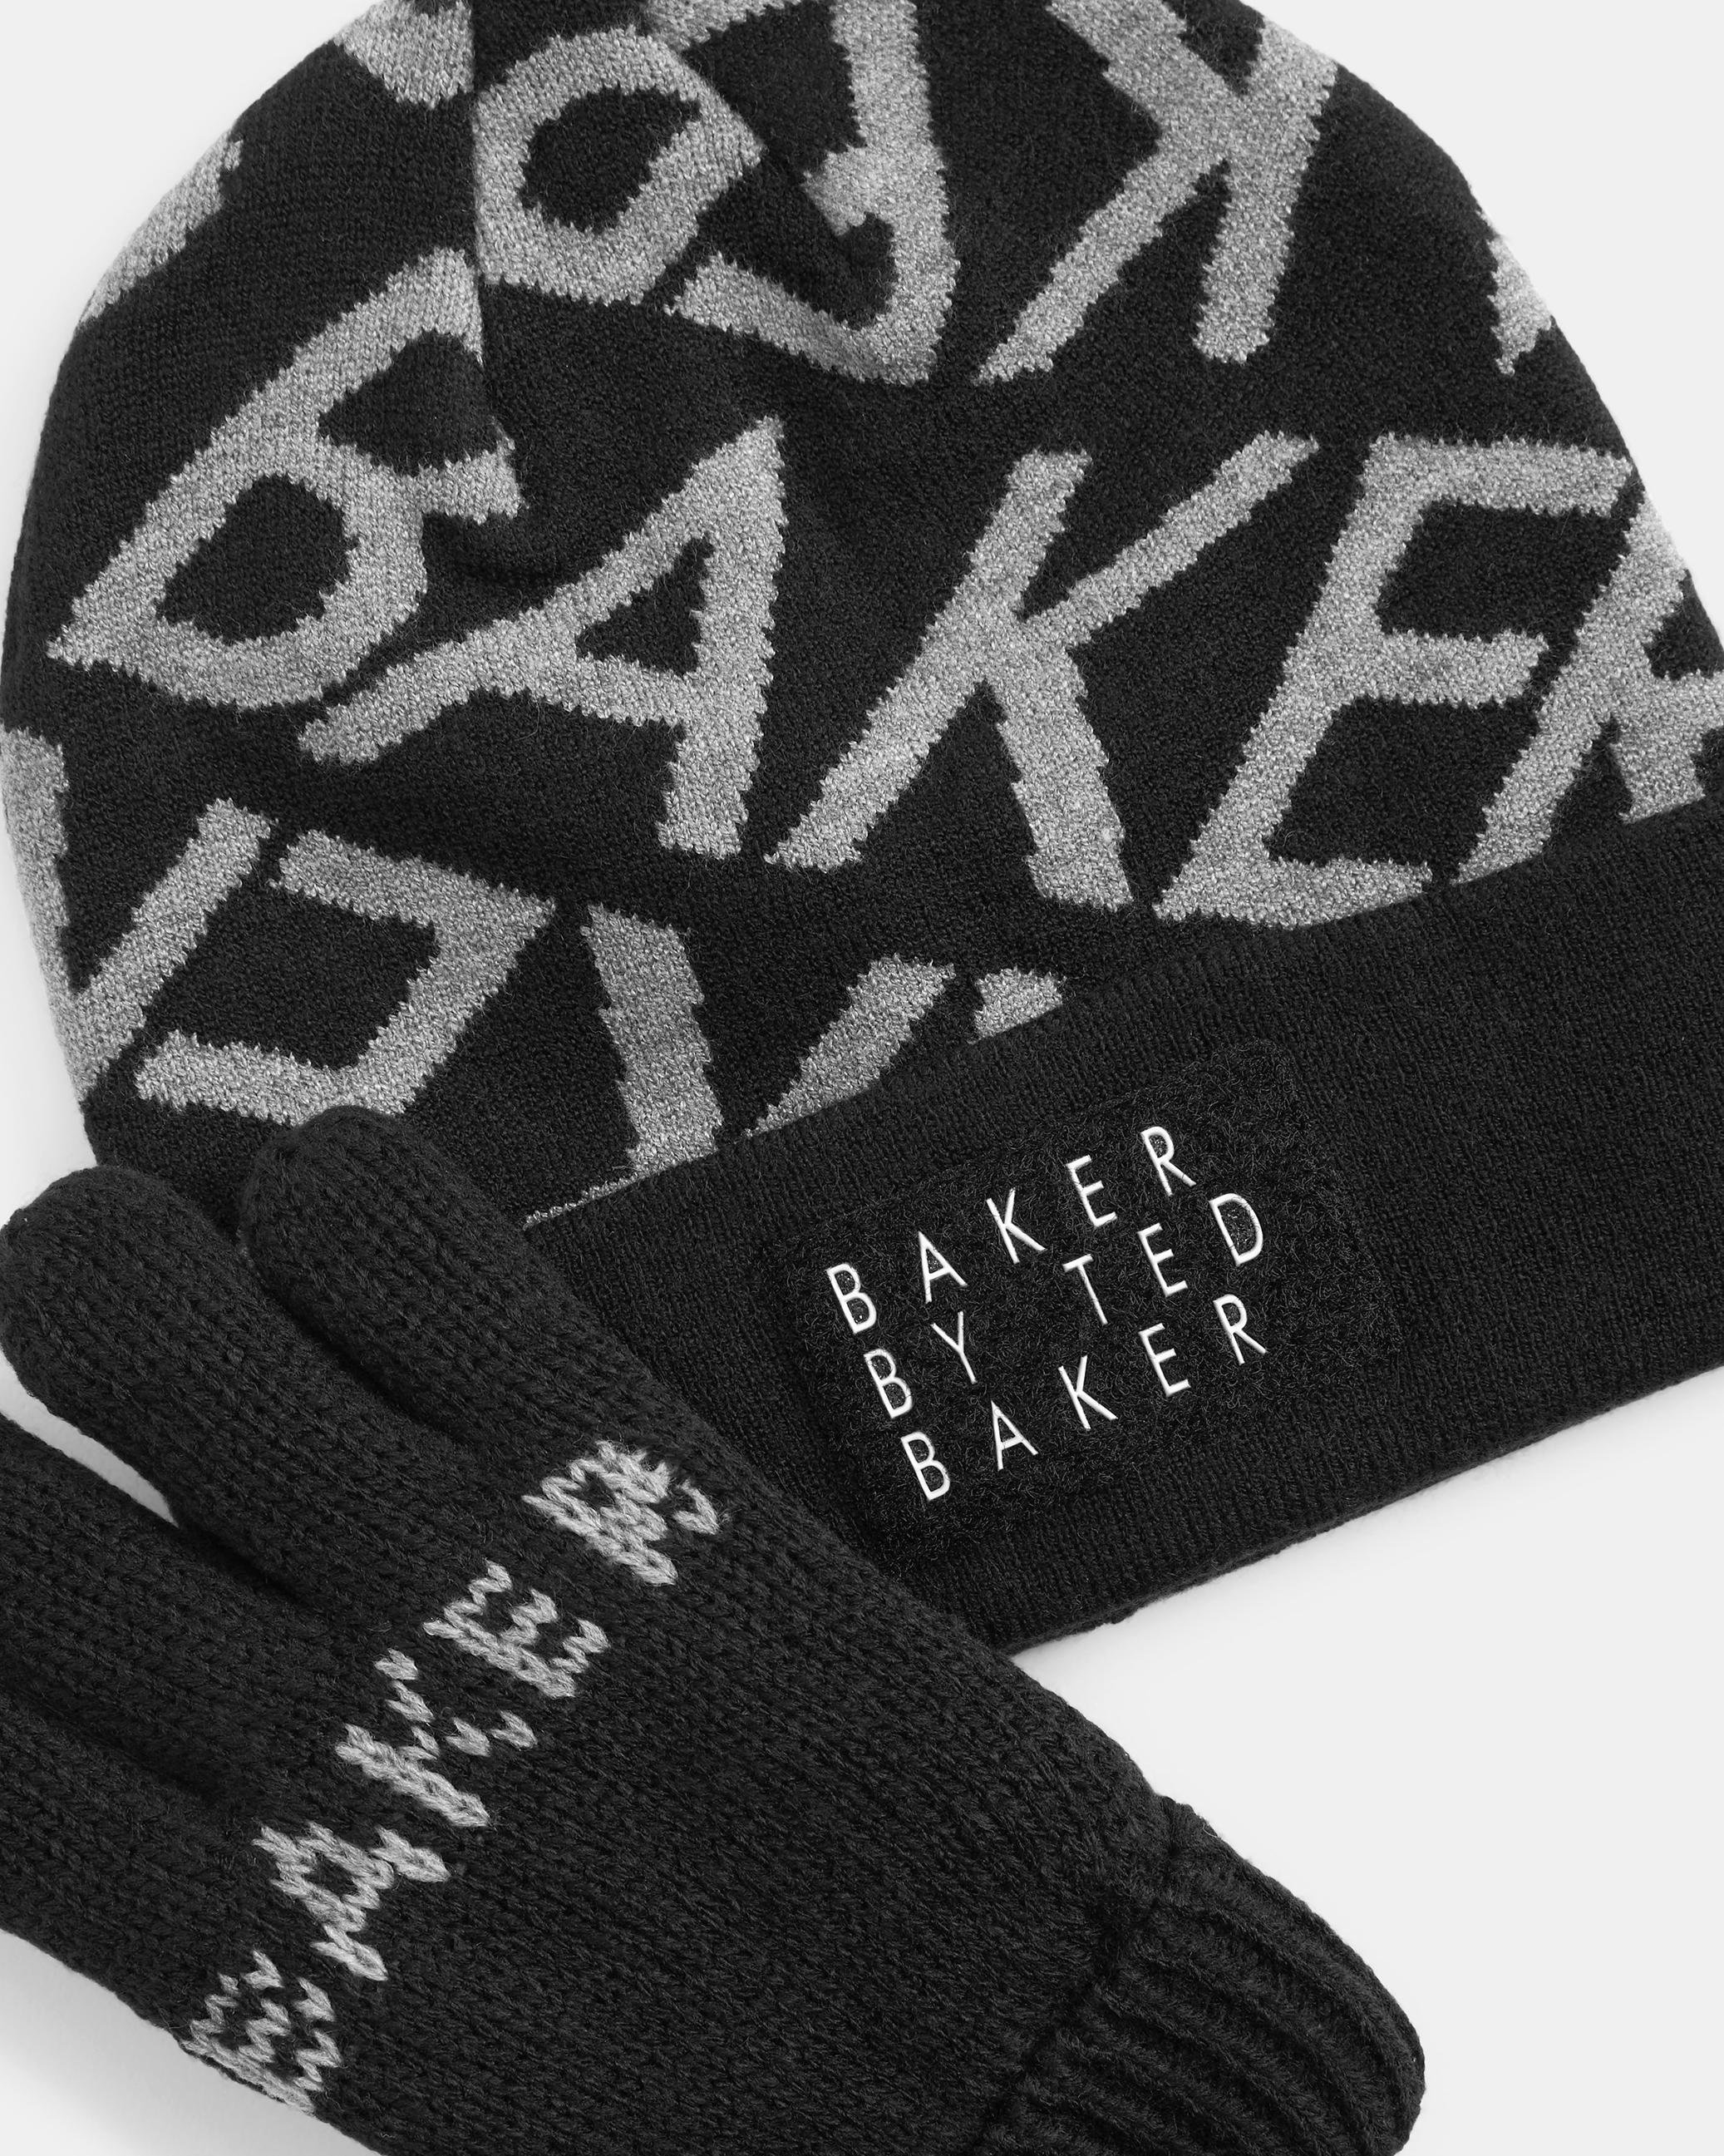 Branded Hat And Gloves Set - LETHAT - Black by TED BAKER